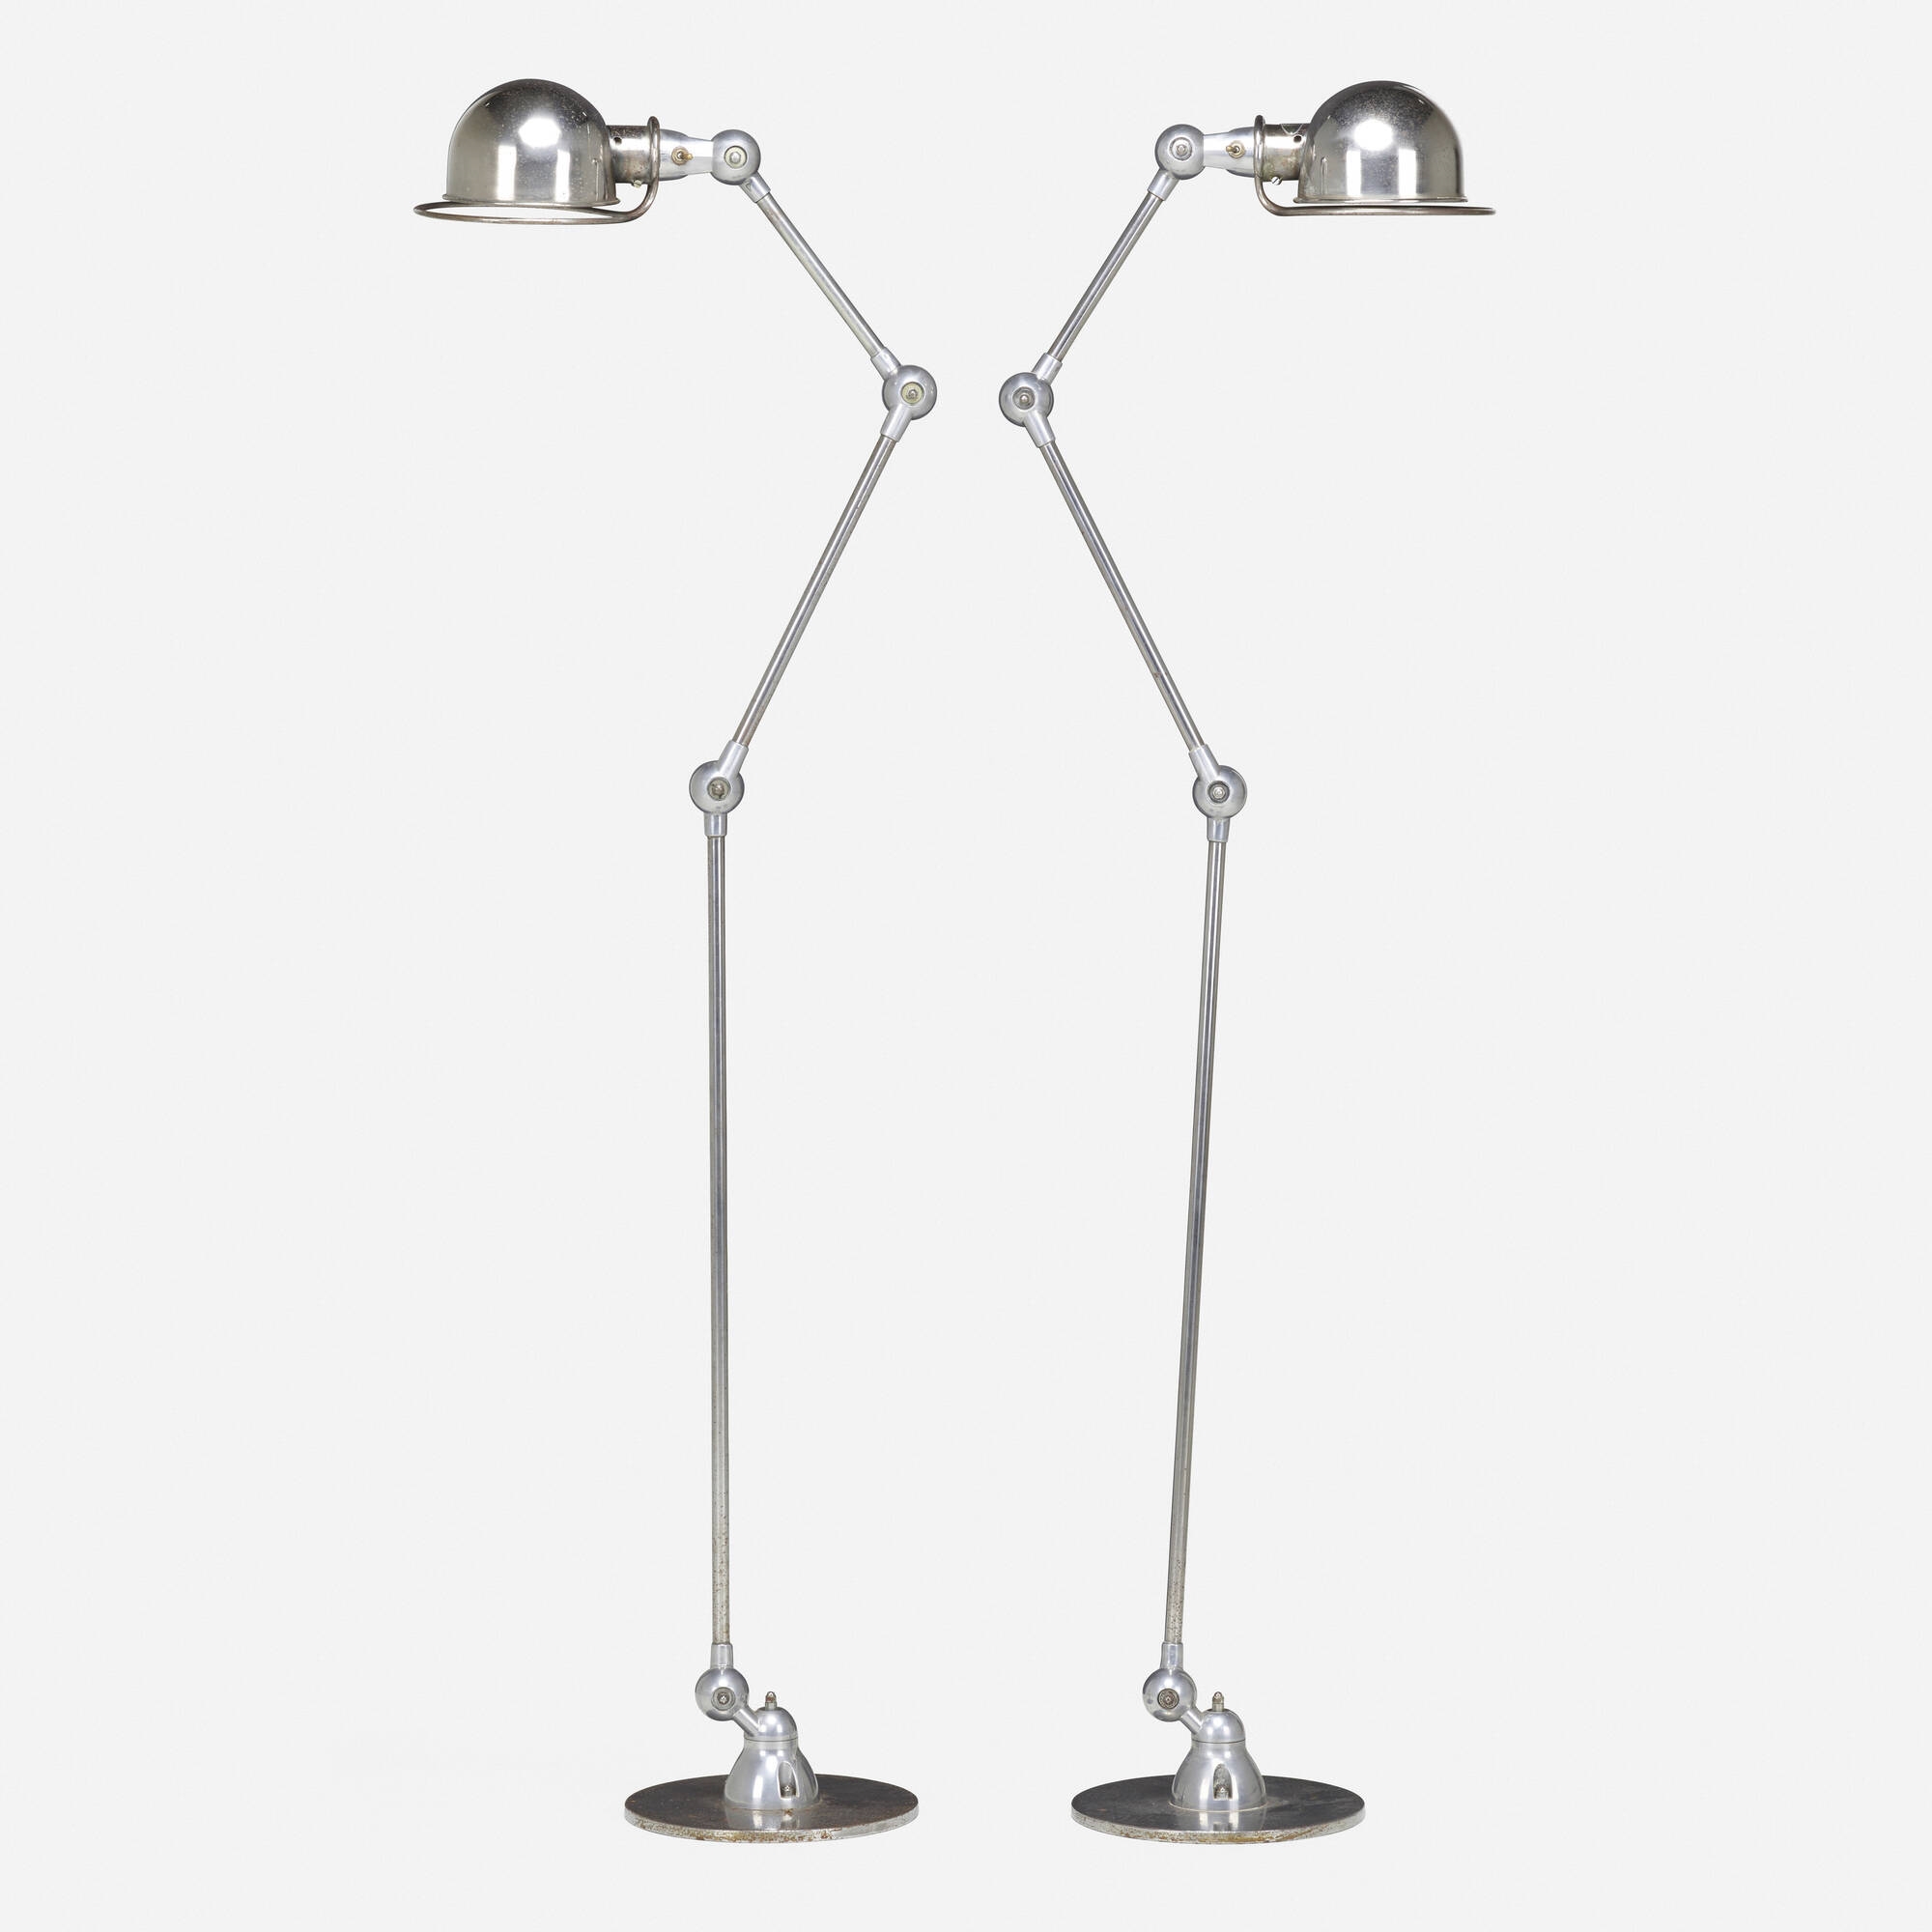 Adjustable floor lamps, pair - Jean-Louis Domecq